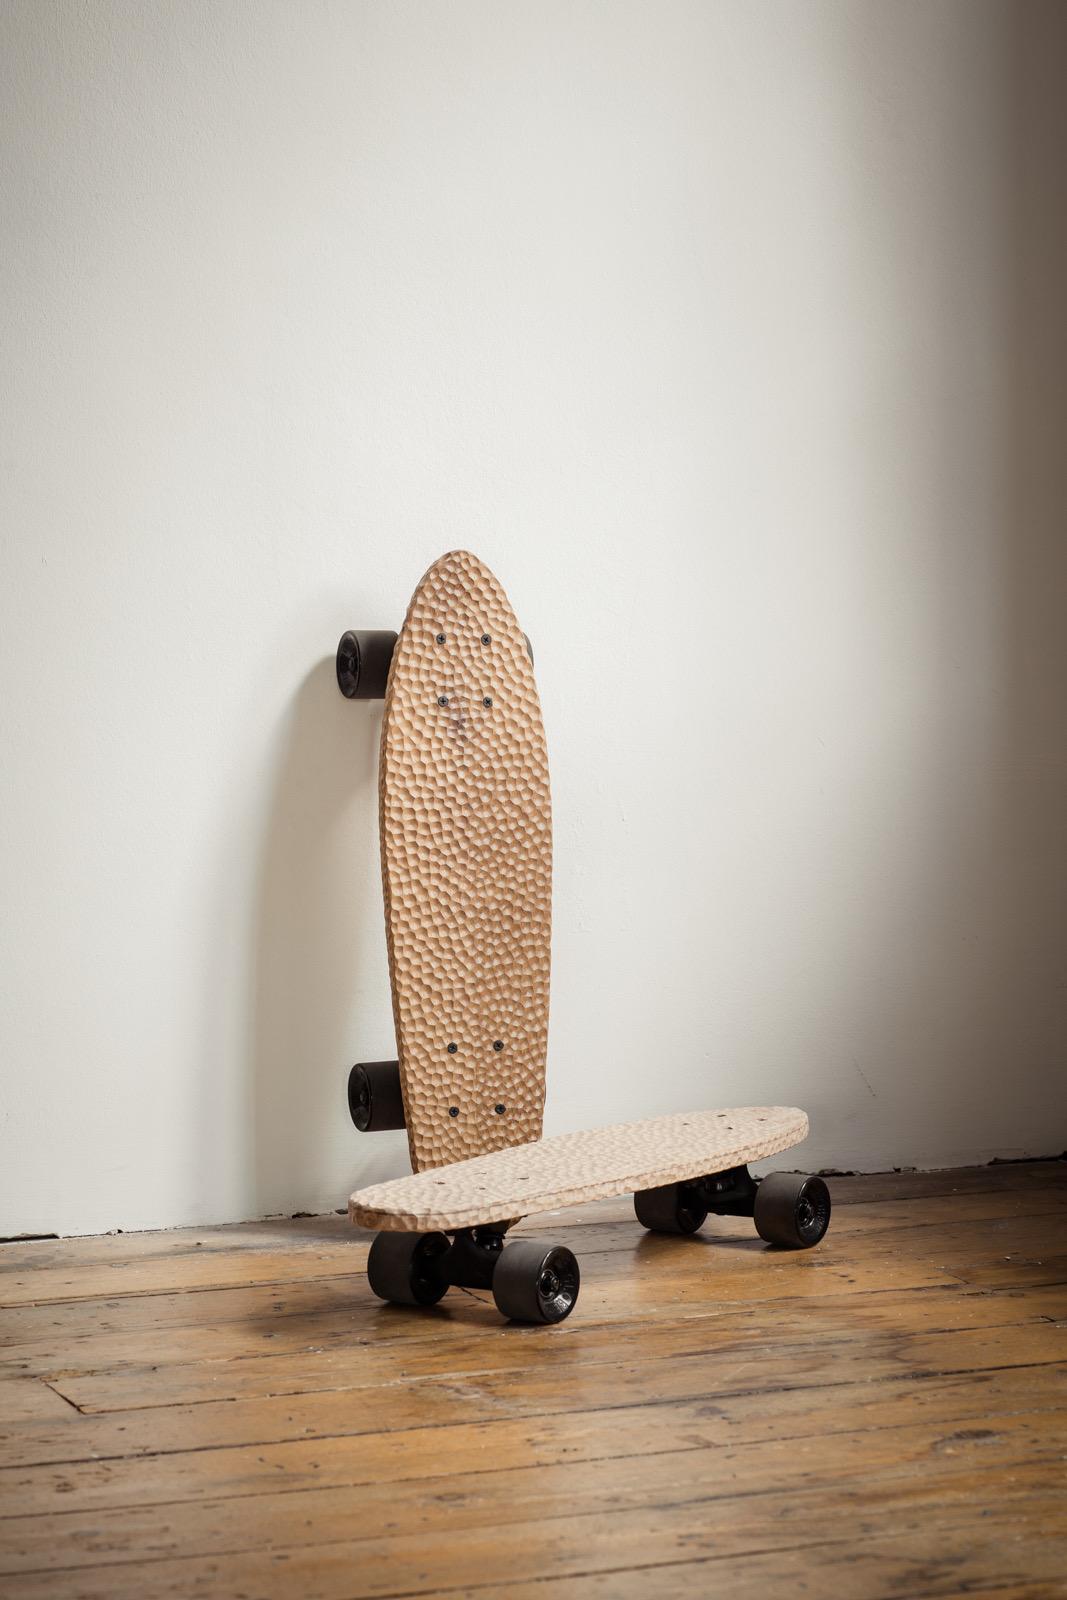 Hand textured cruiser skateboards made of cherry/walnut with globe trucks and wheels.

Materials: 
Cherry and walnut 

Dimensions: 
13 cm x 55 cm x 10 cm
5